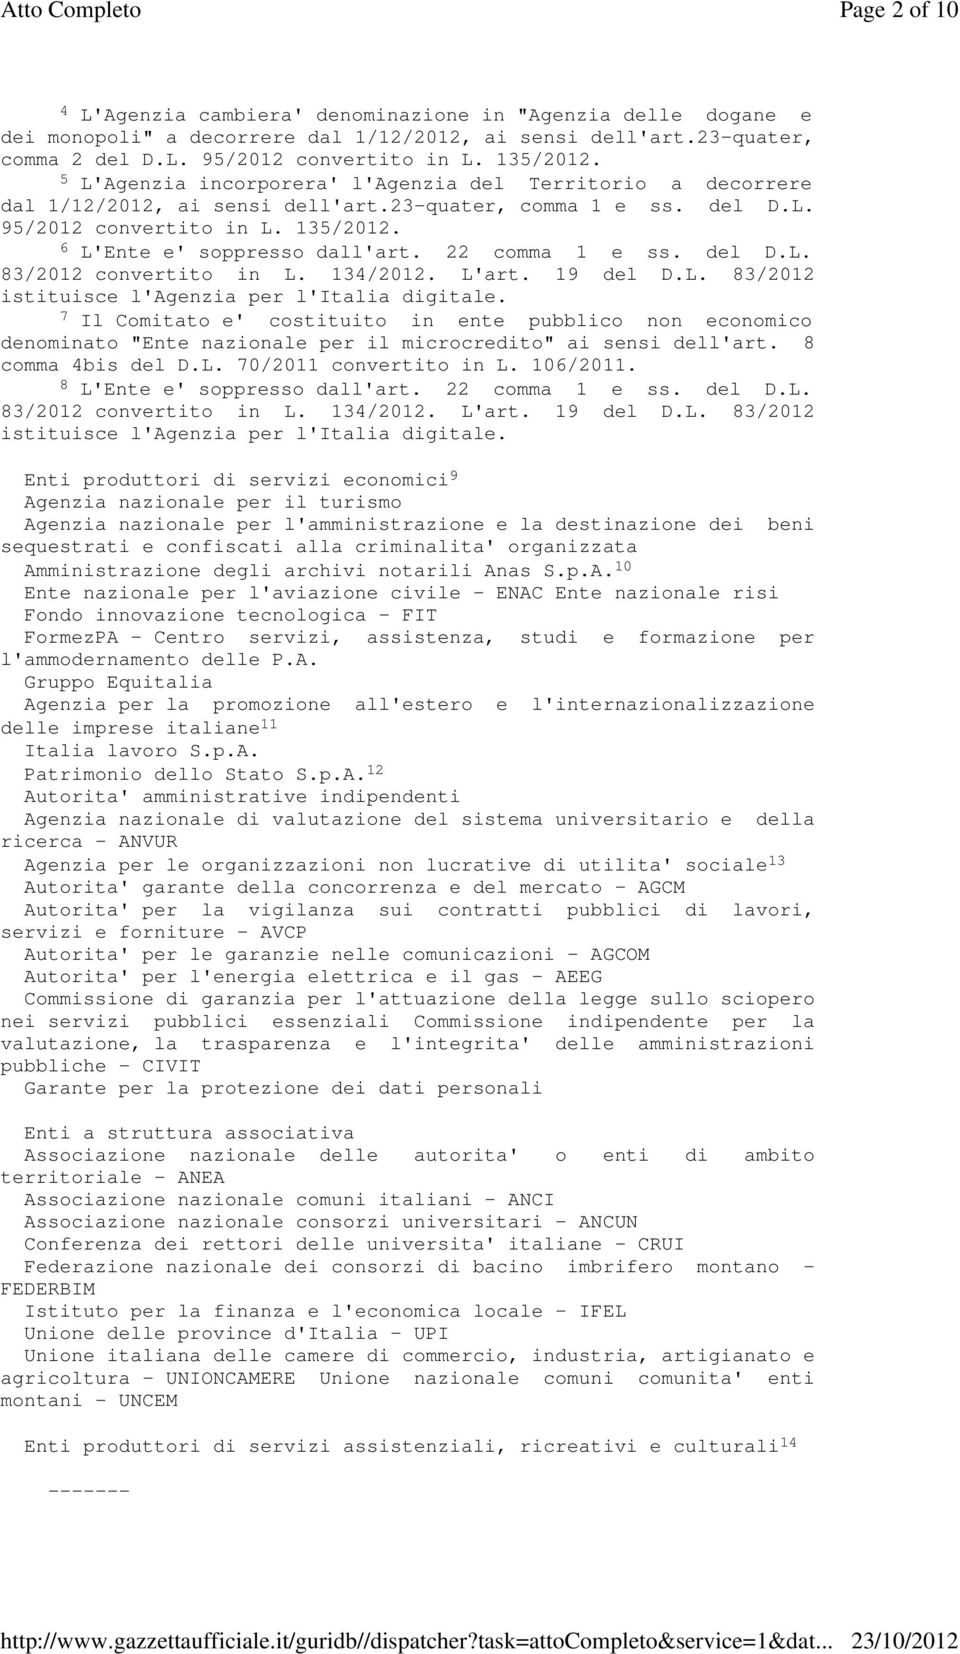 22 comma 1 e ss. del D.L. 83/2012 convertito in L. 134/2012. L'art. 19 del D.L. 83/2012 istituisce l'agenzia per l'italia digitale.